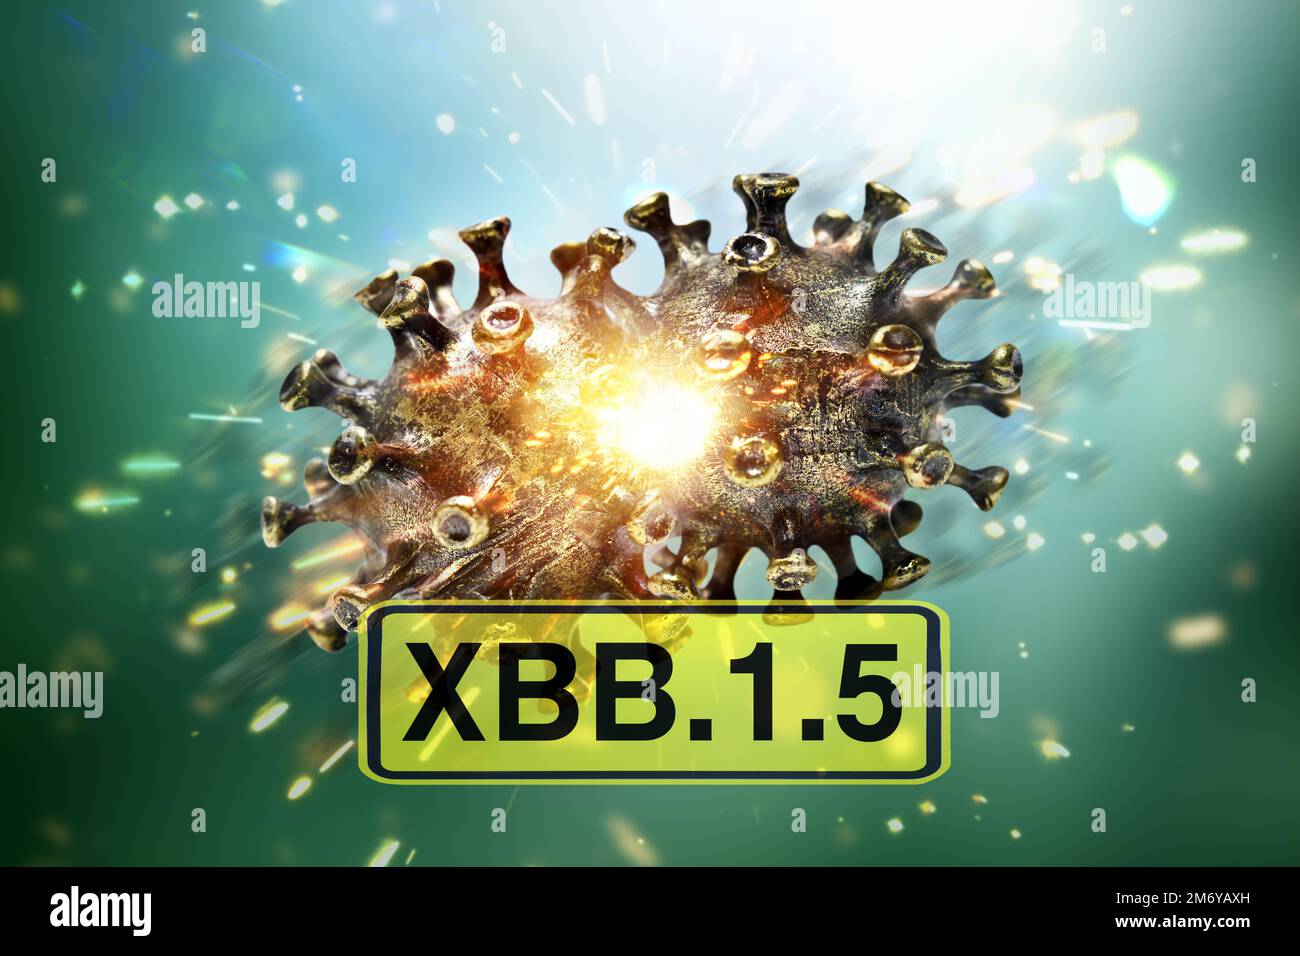 Corona variante XBB.1,5, image symbolique Banque D'Images